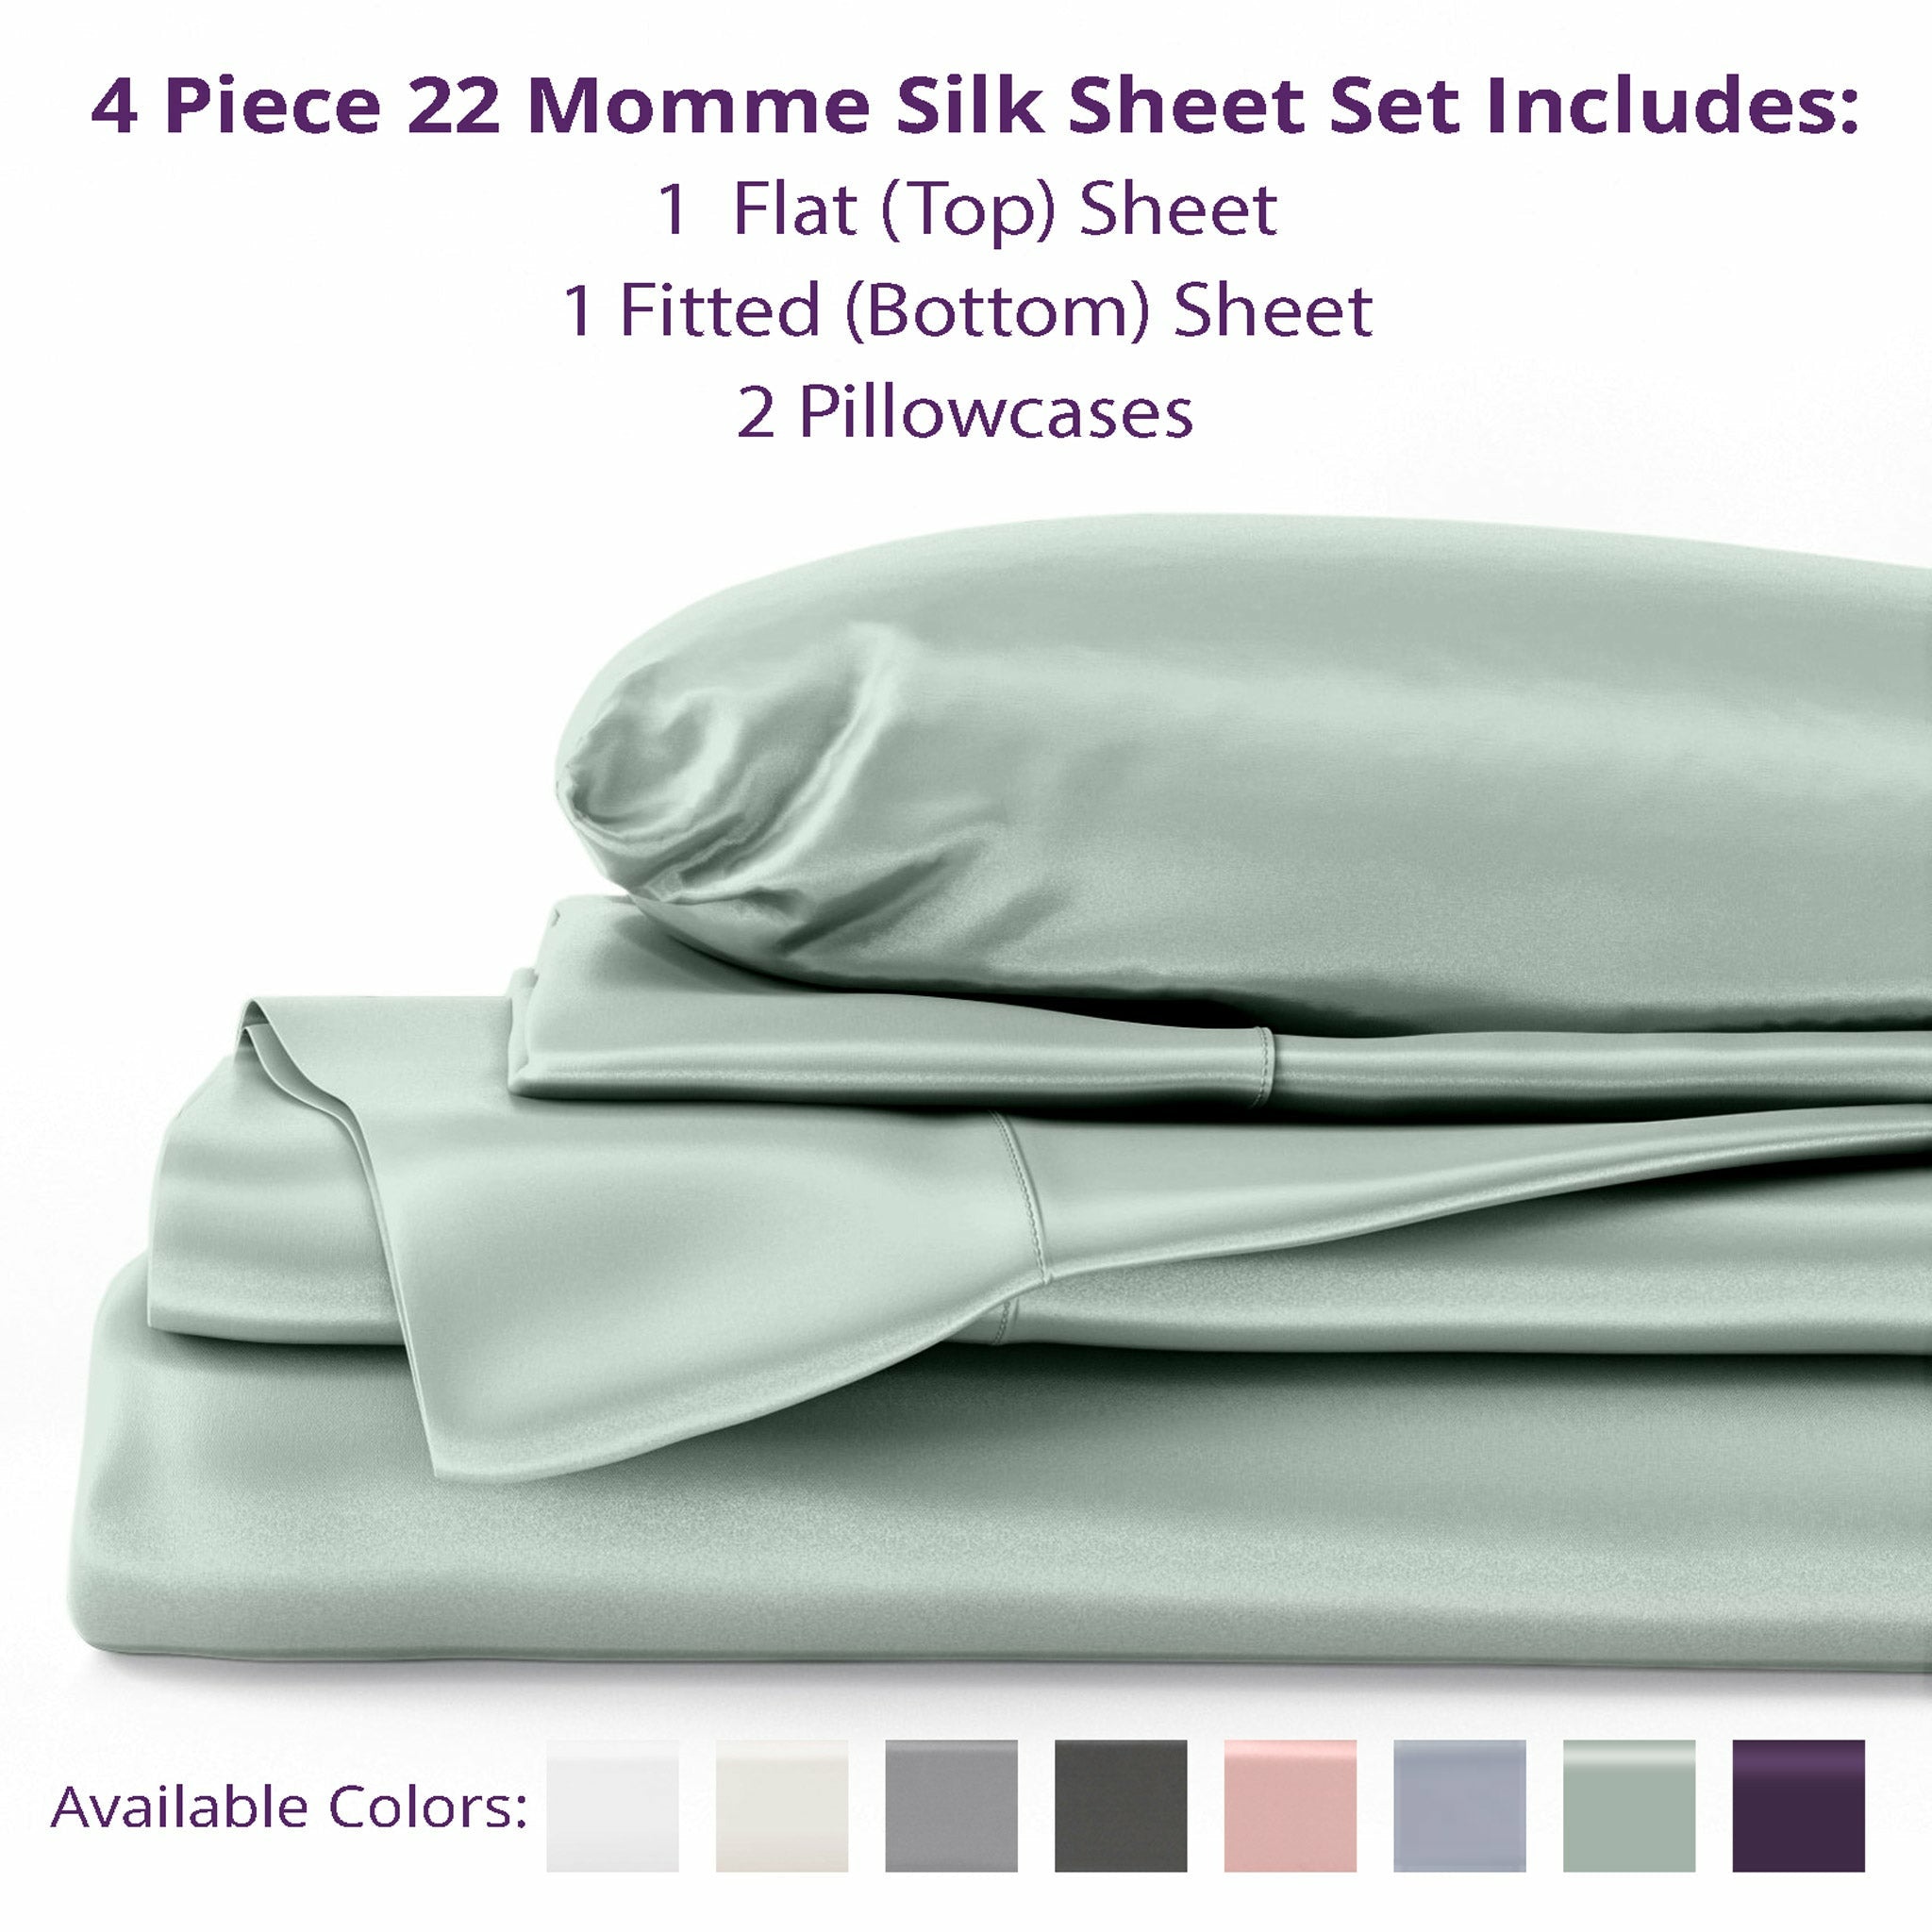 22 Momme Silk Sheet Sets